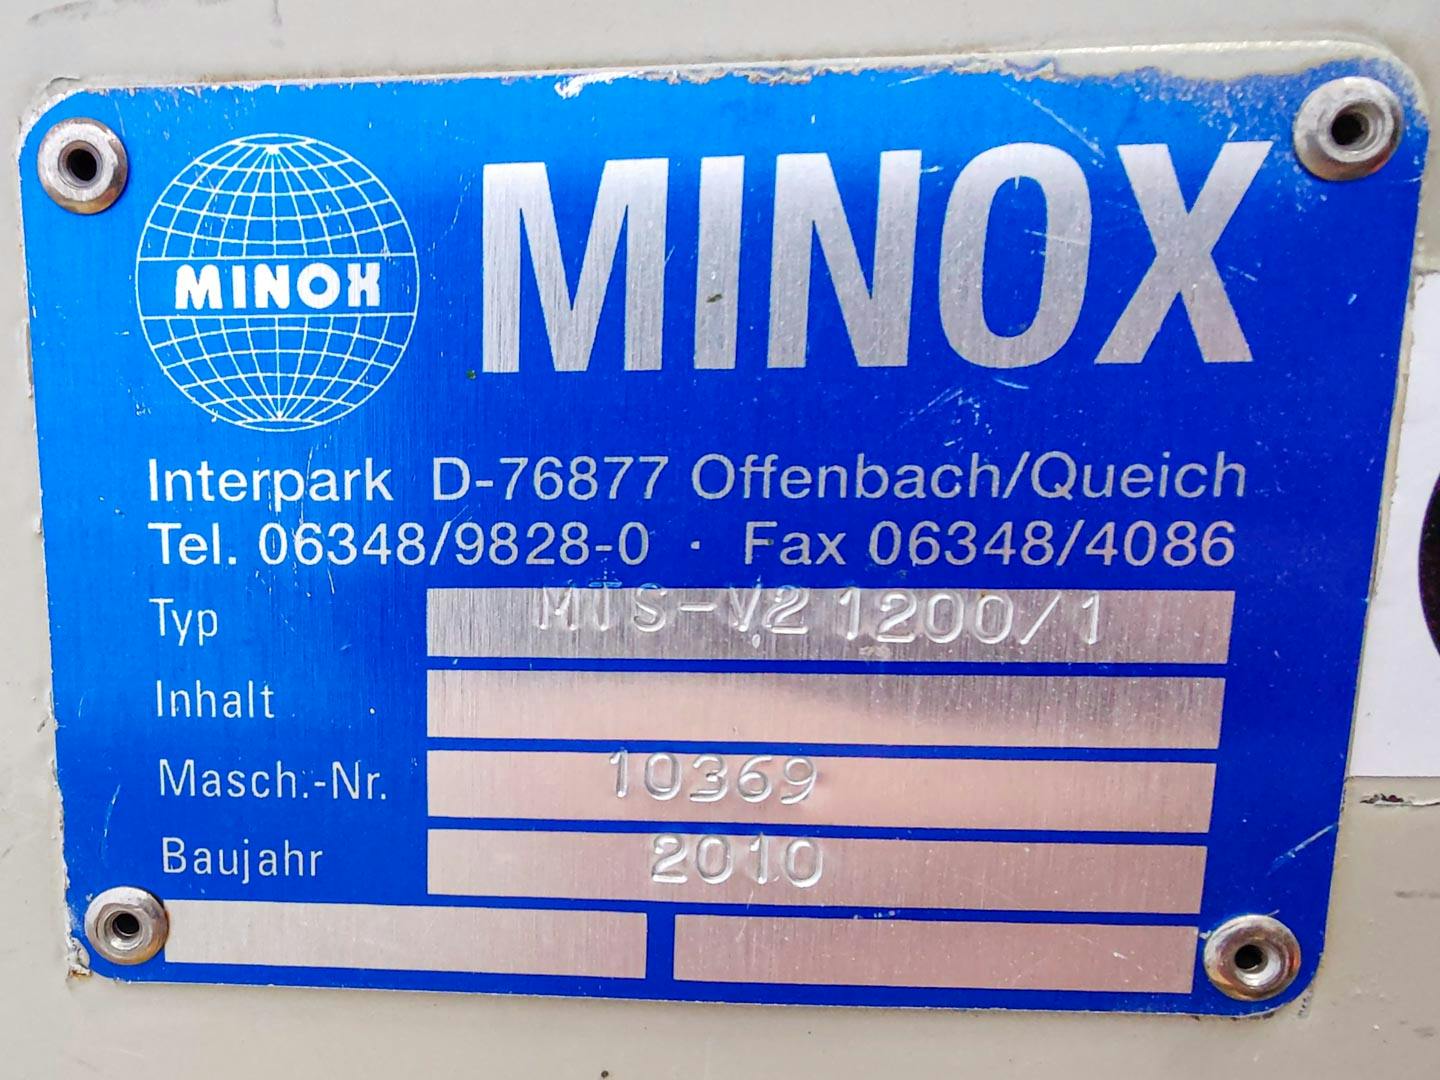 Minox MTS-V2 1200/1 - Rüttelsieb - image 10